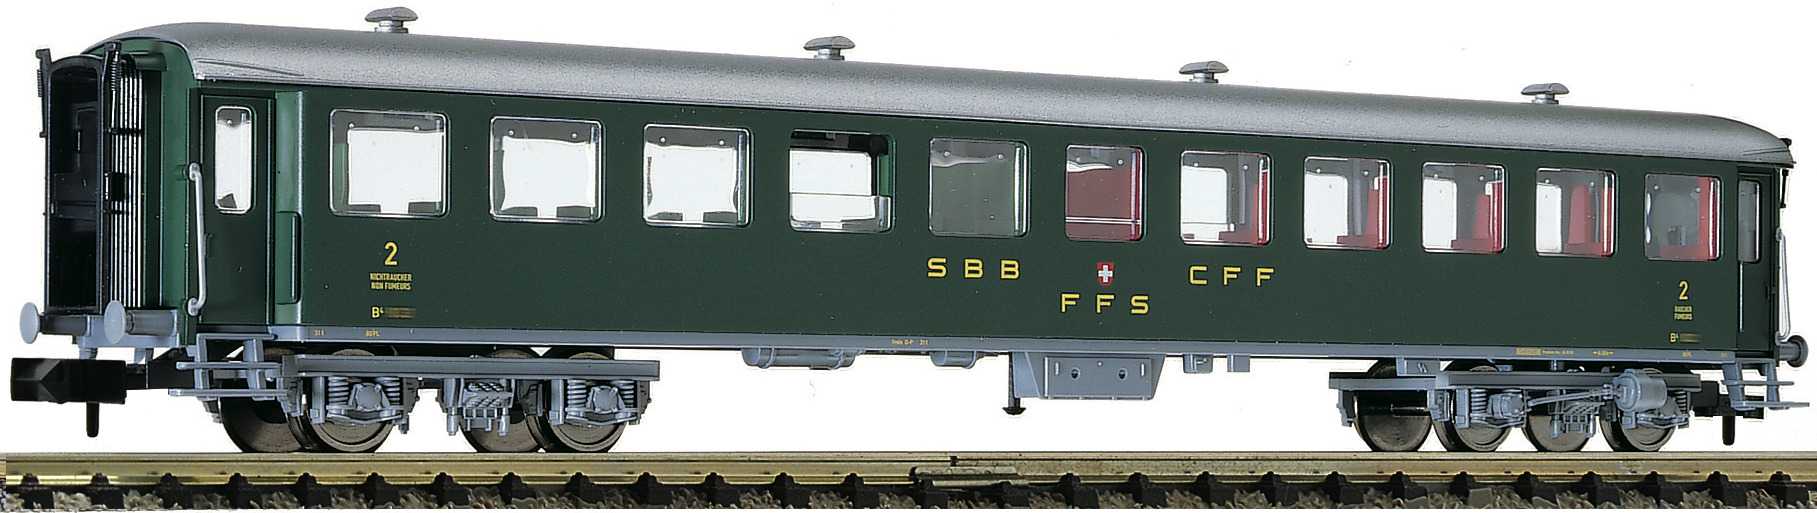  Roco-Fleischmann Autocar 2nde classe de train express type B, CFF-N -